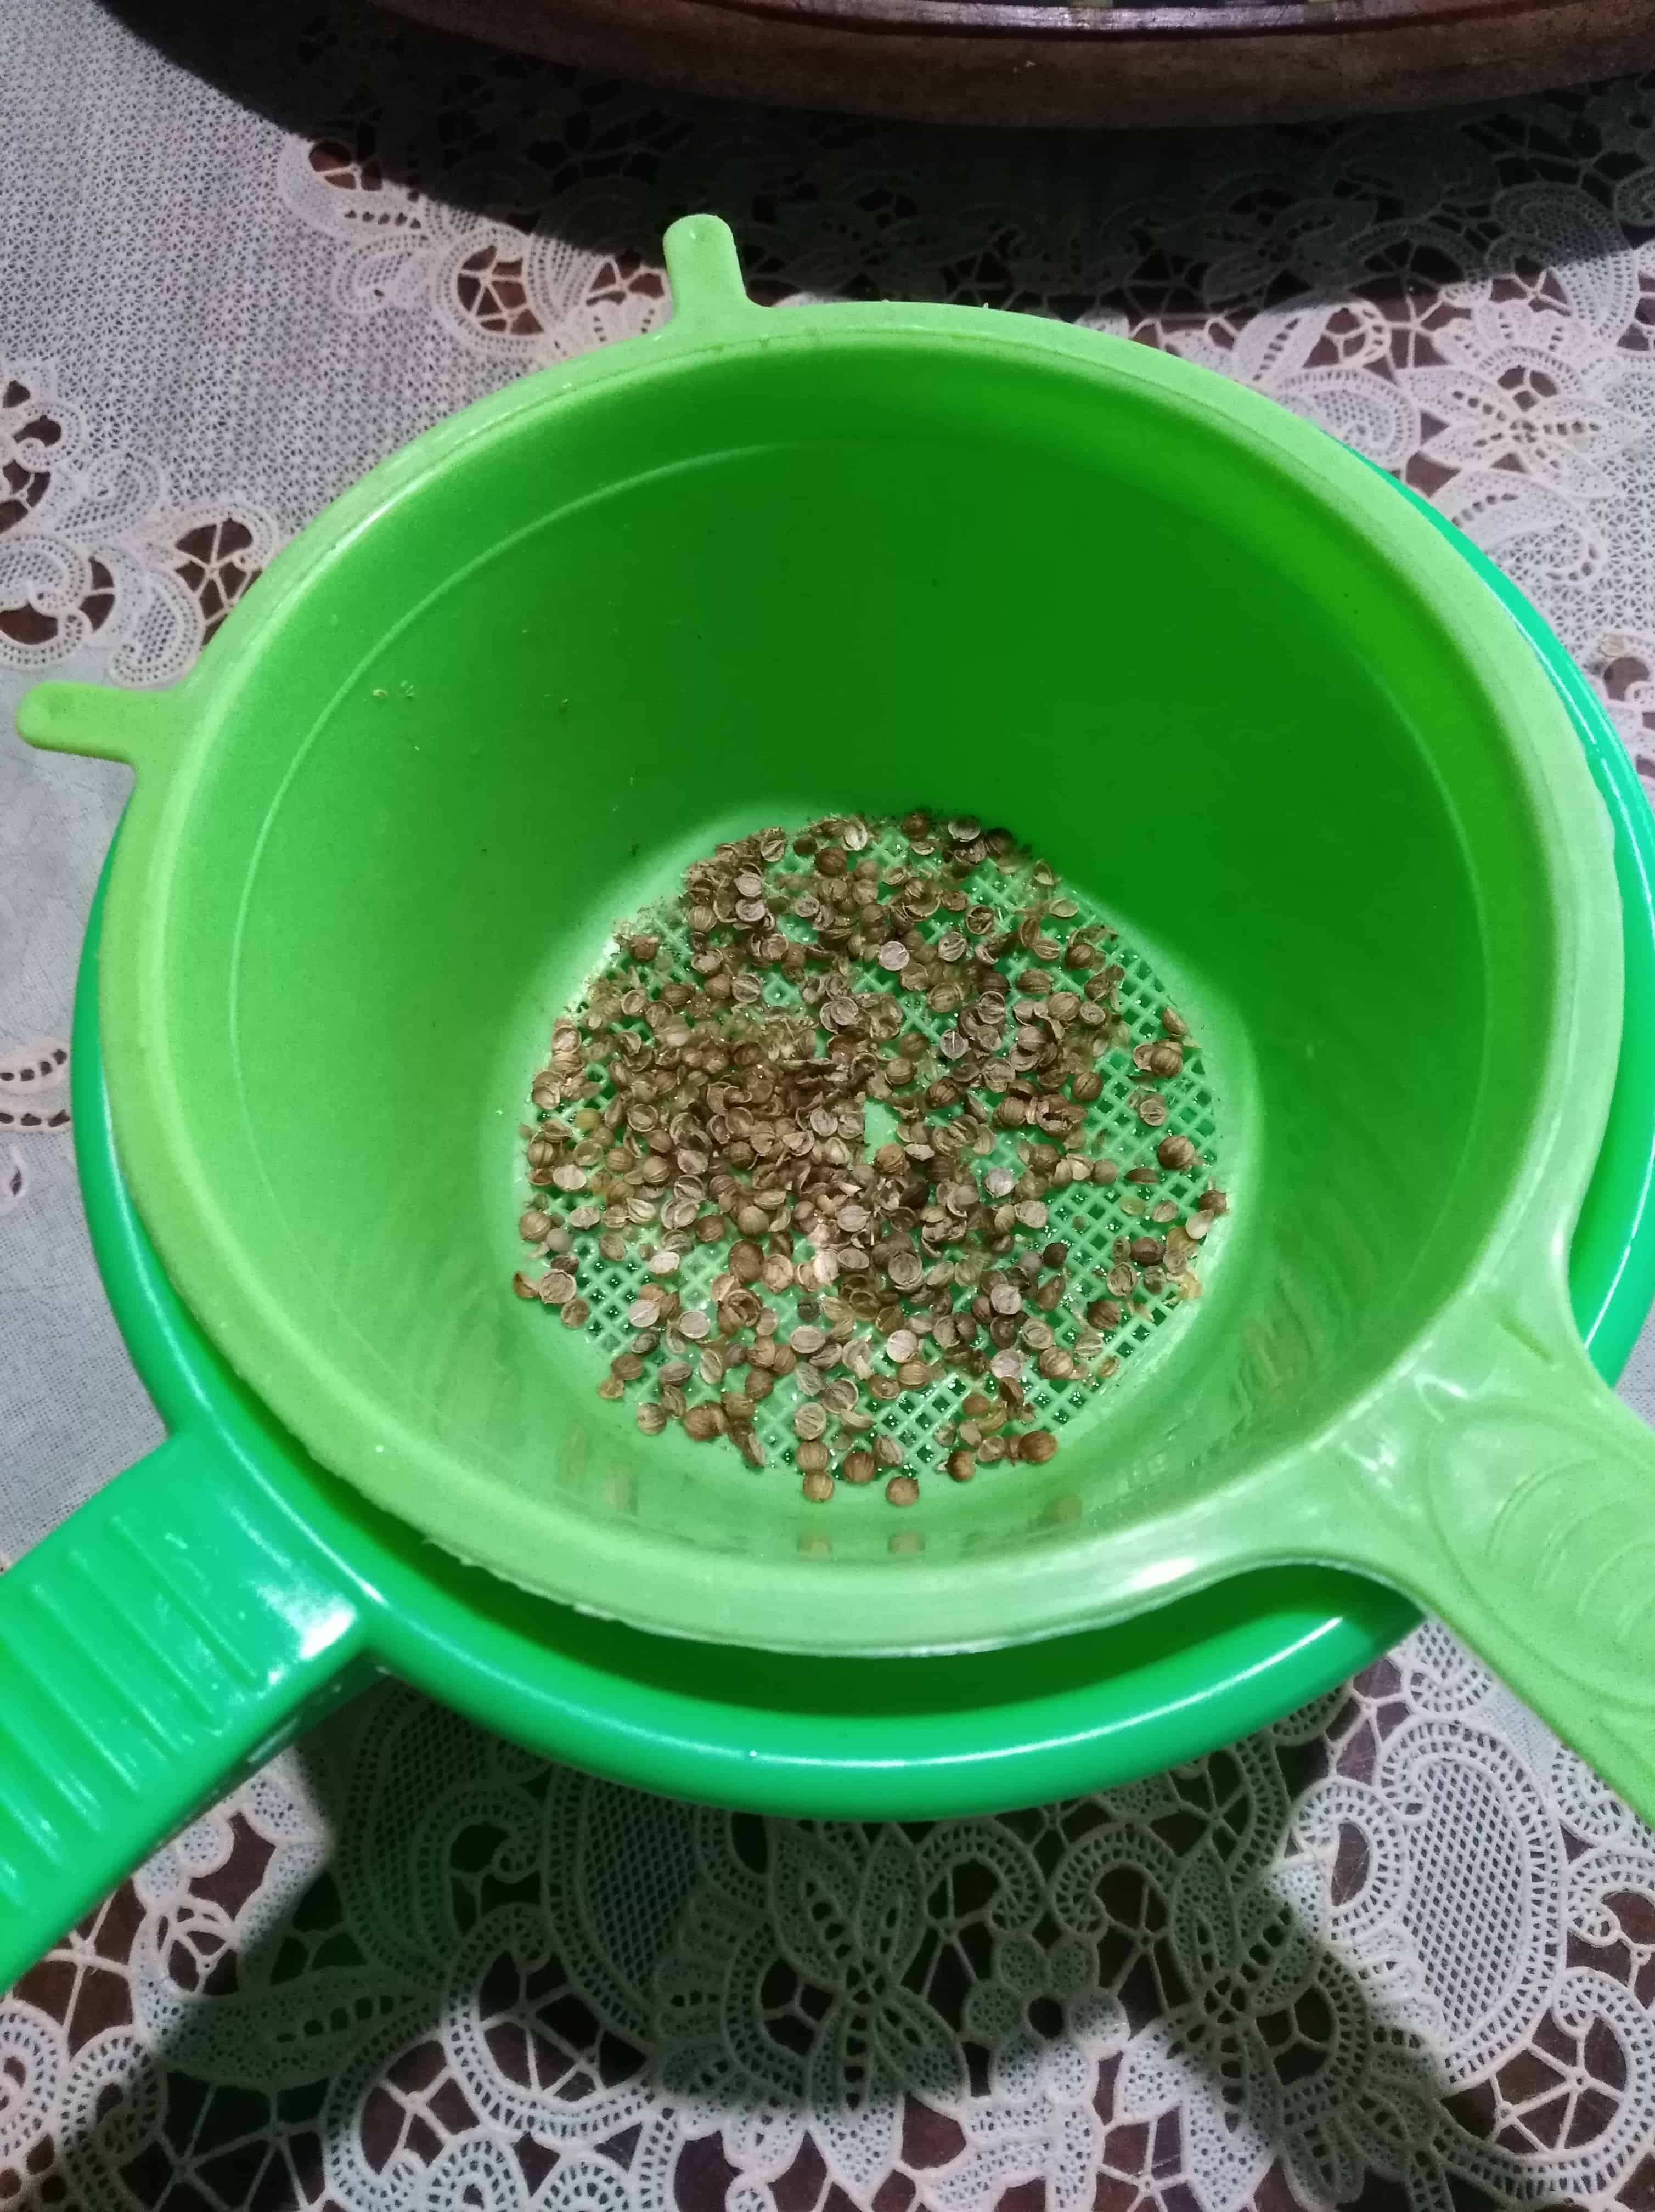 Coriander seeds sprinkled at the bottom of a green colander